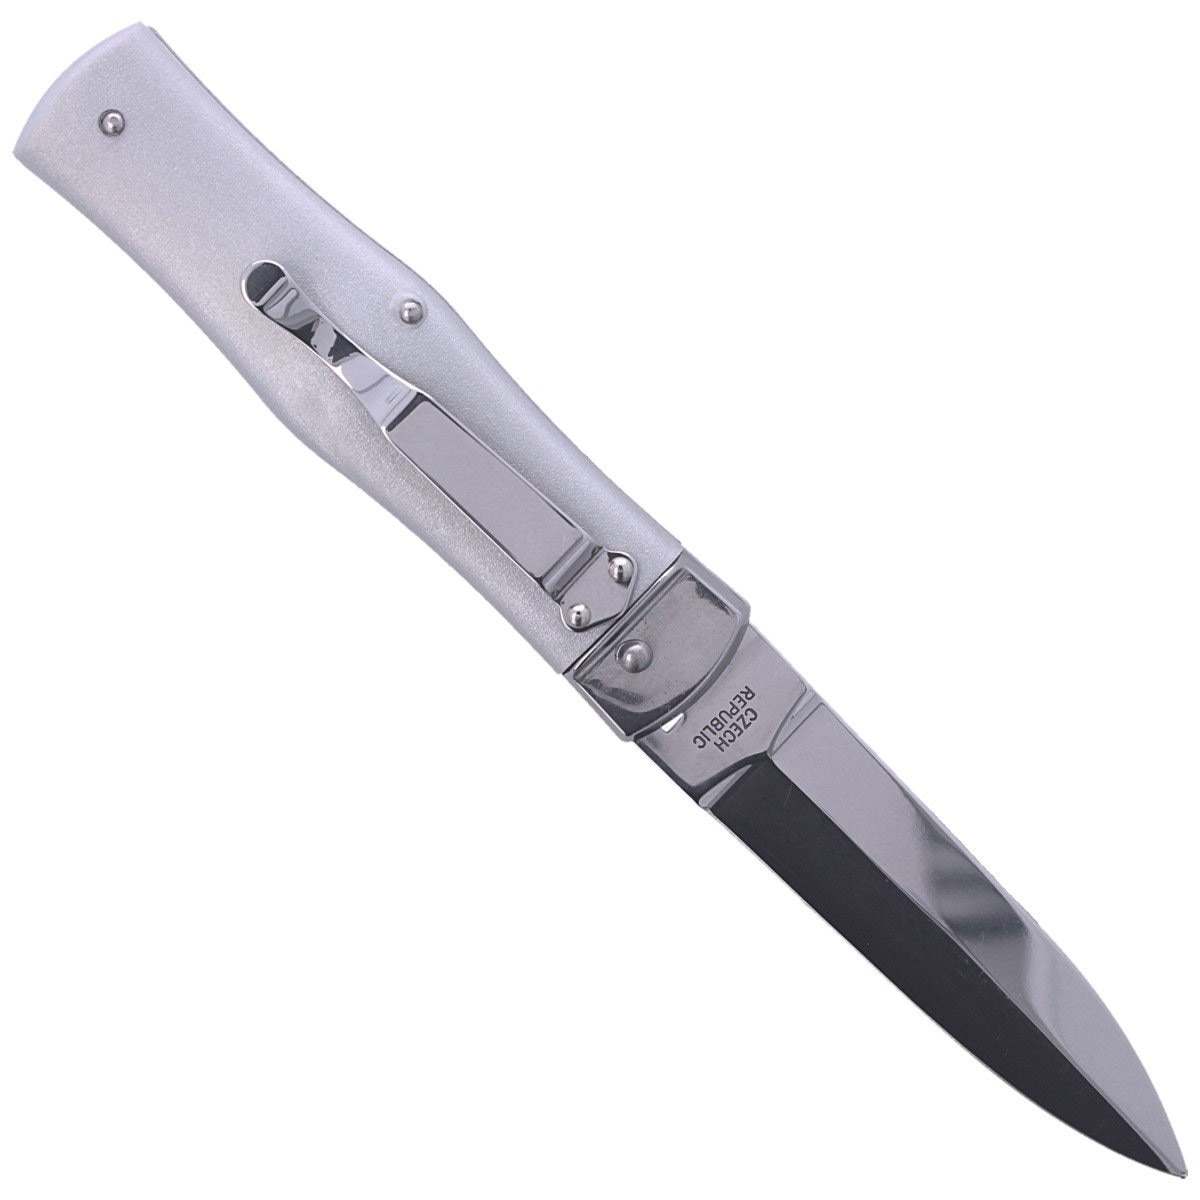 Nóż sprężynowy Mikov Predator ABS 241-NH-1/N Grey - z klipsem